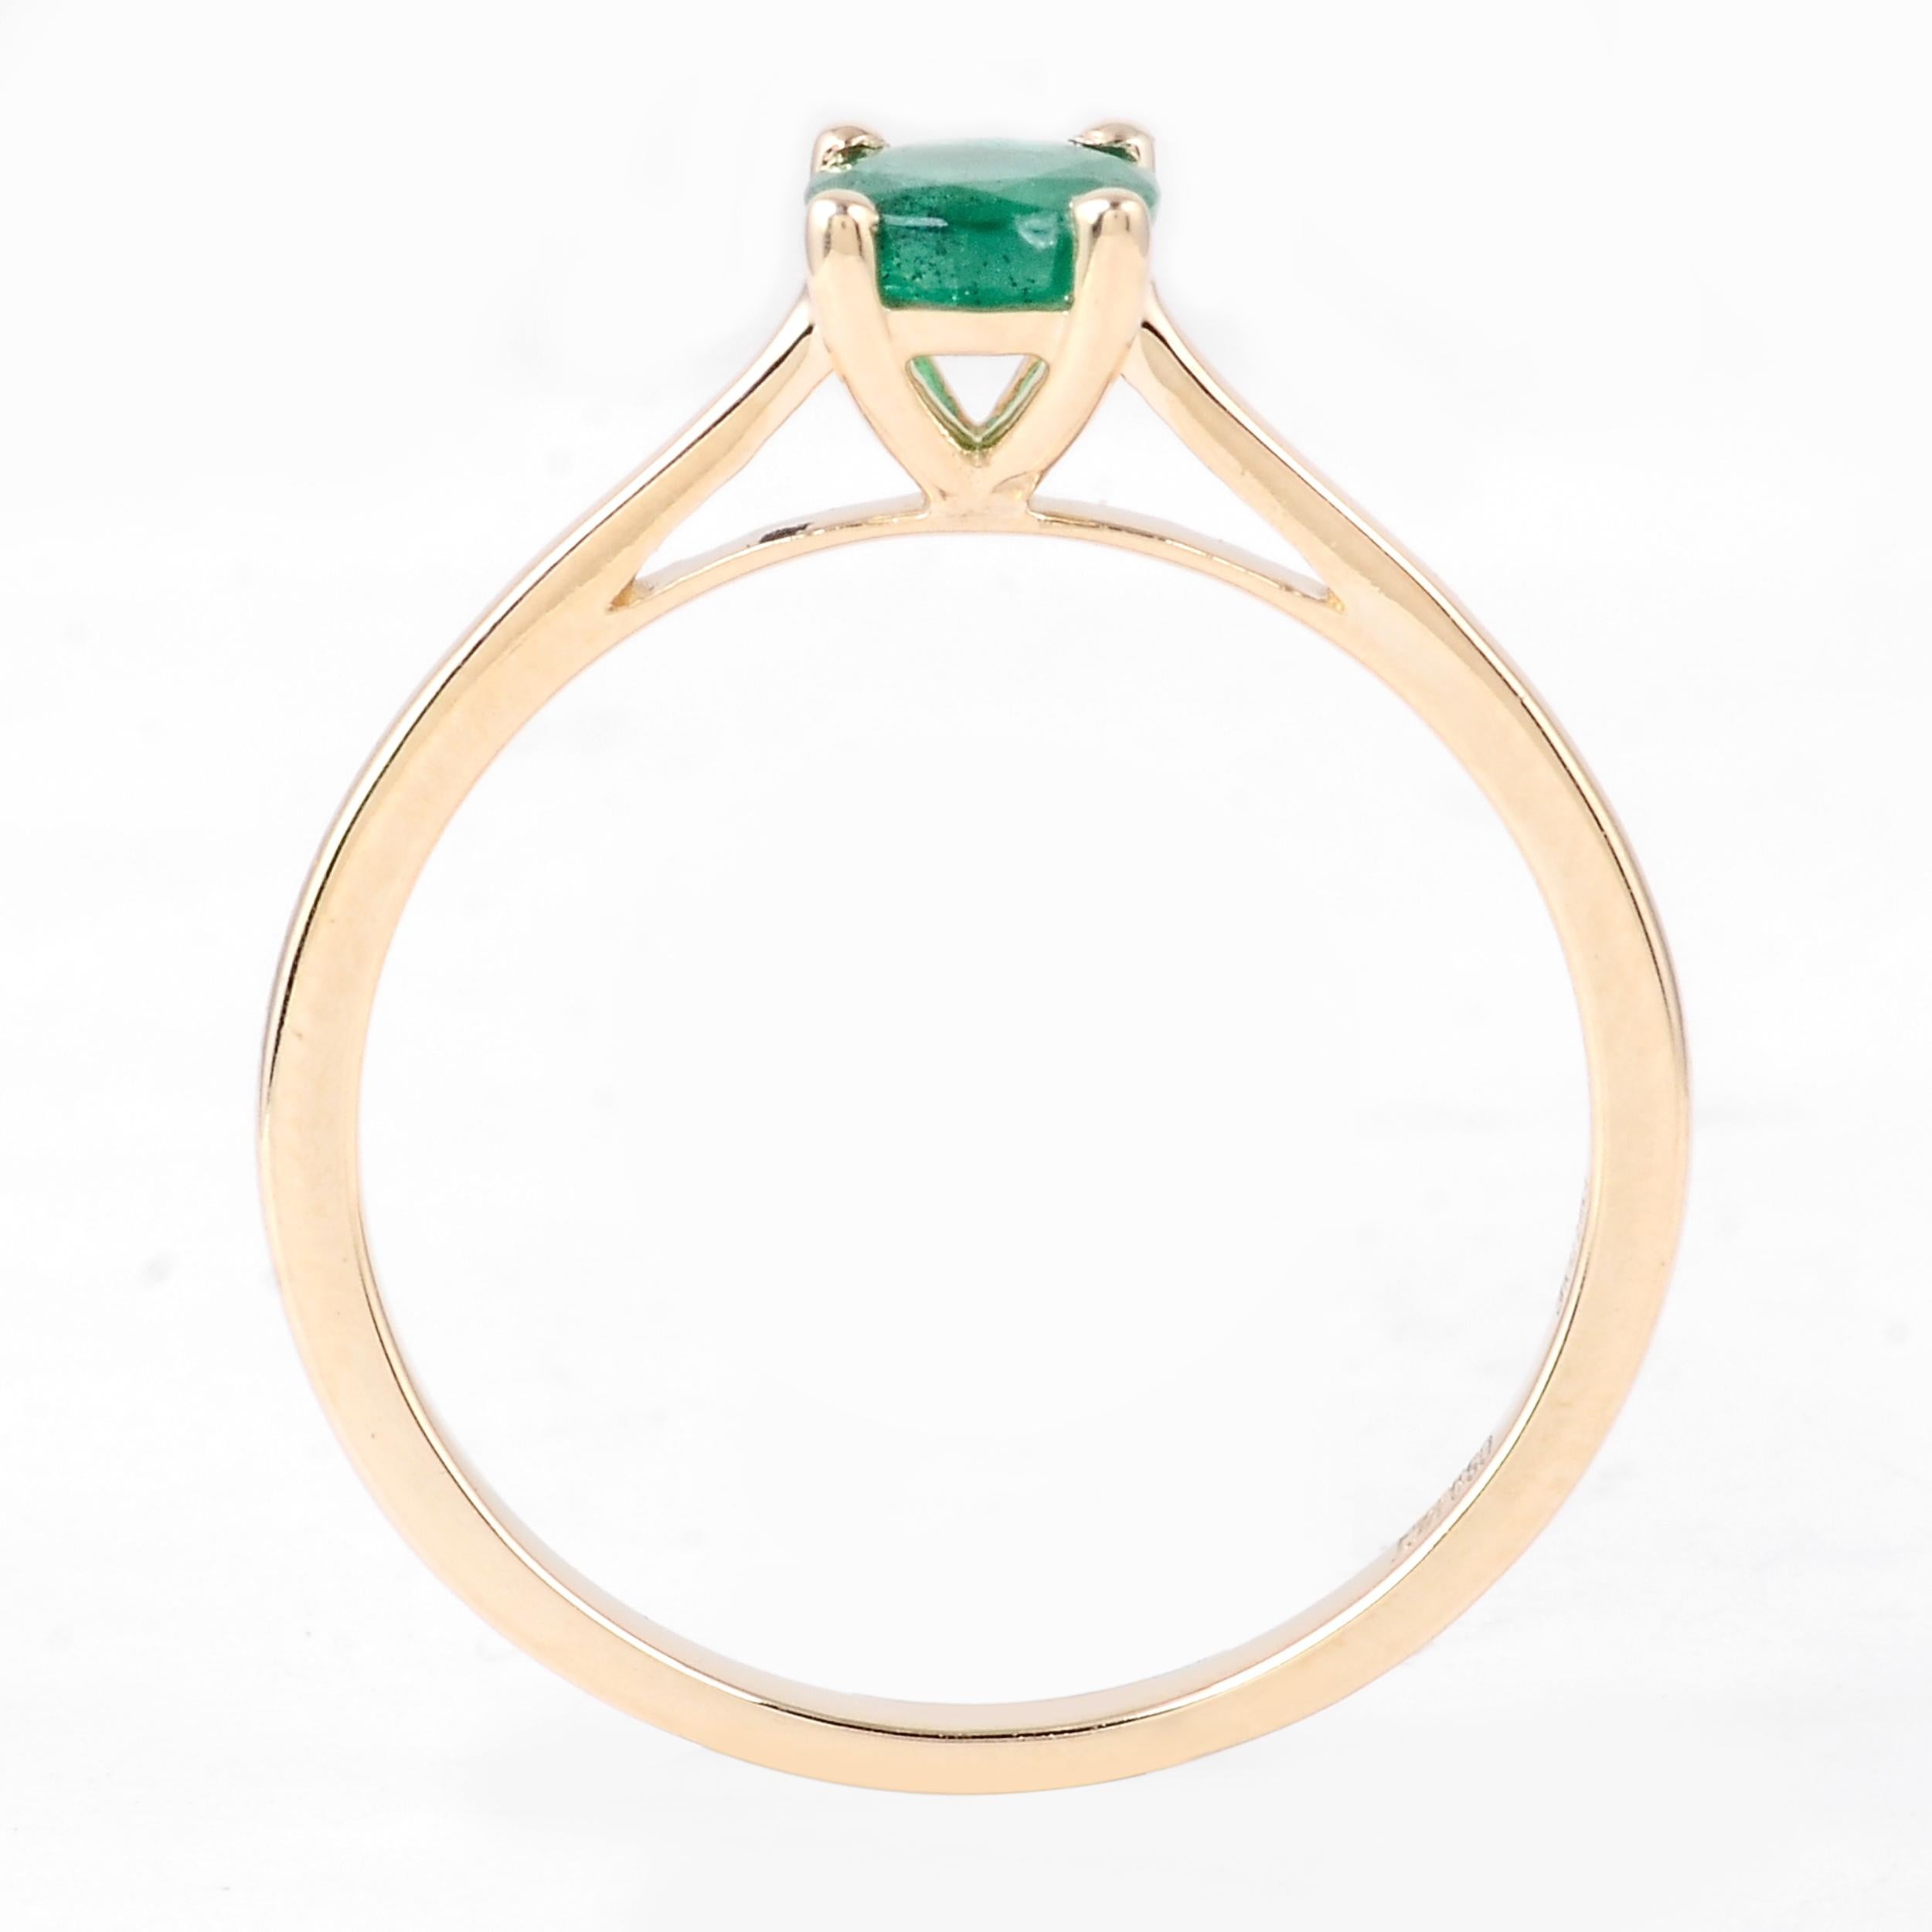 Brilliant Cut Luxurious 14K Emerald Cocktail Ring, Size 7 - Elegant Statement Jewelry Piece